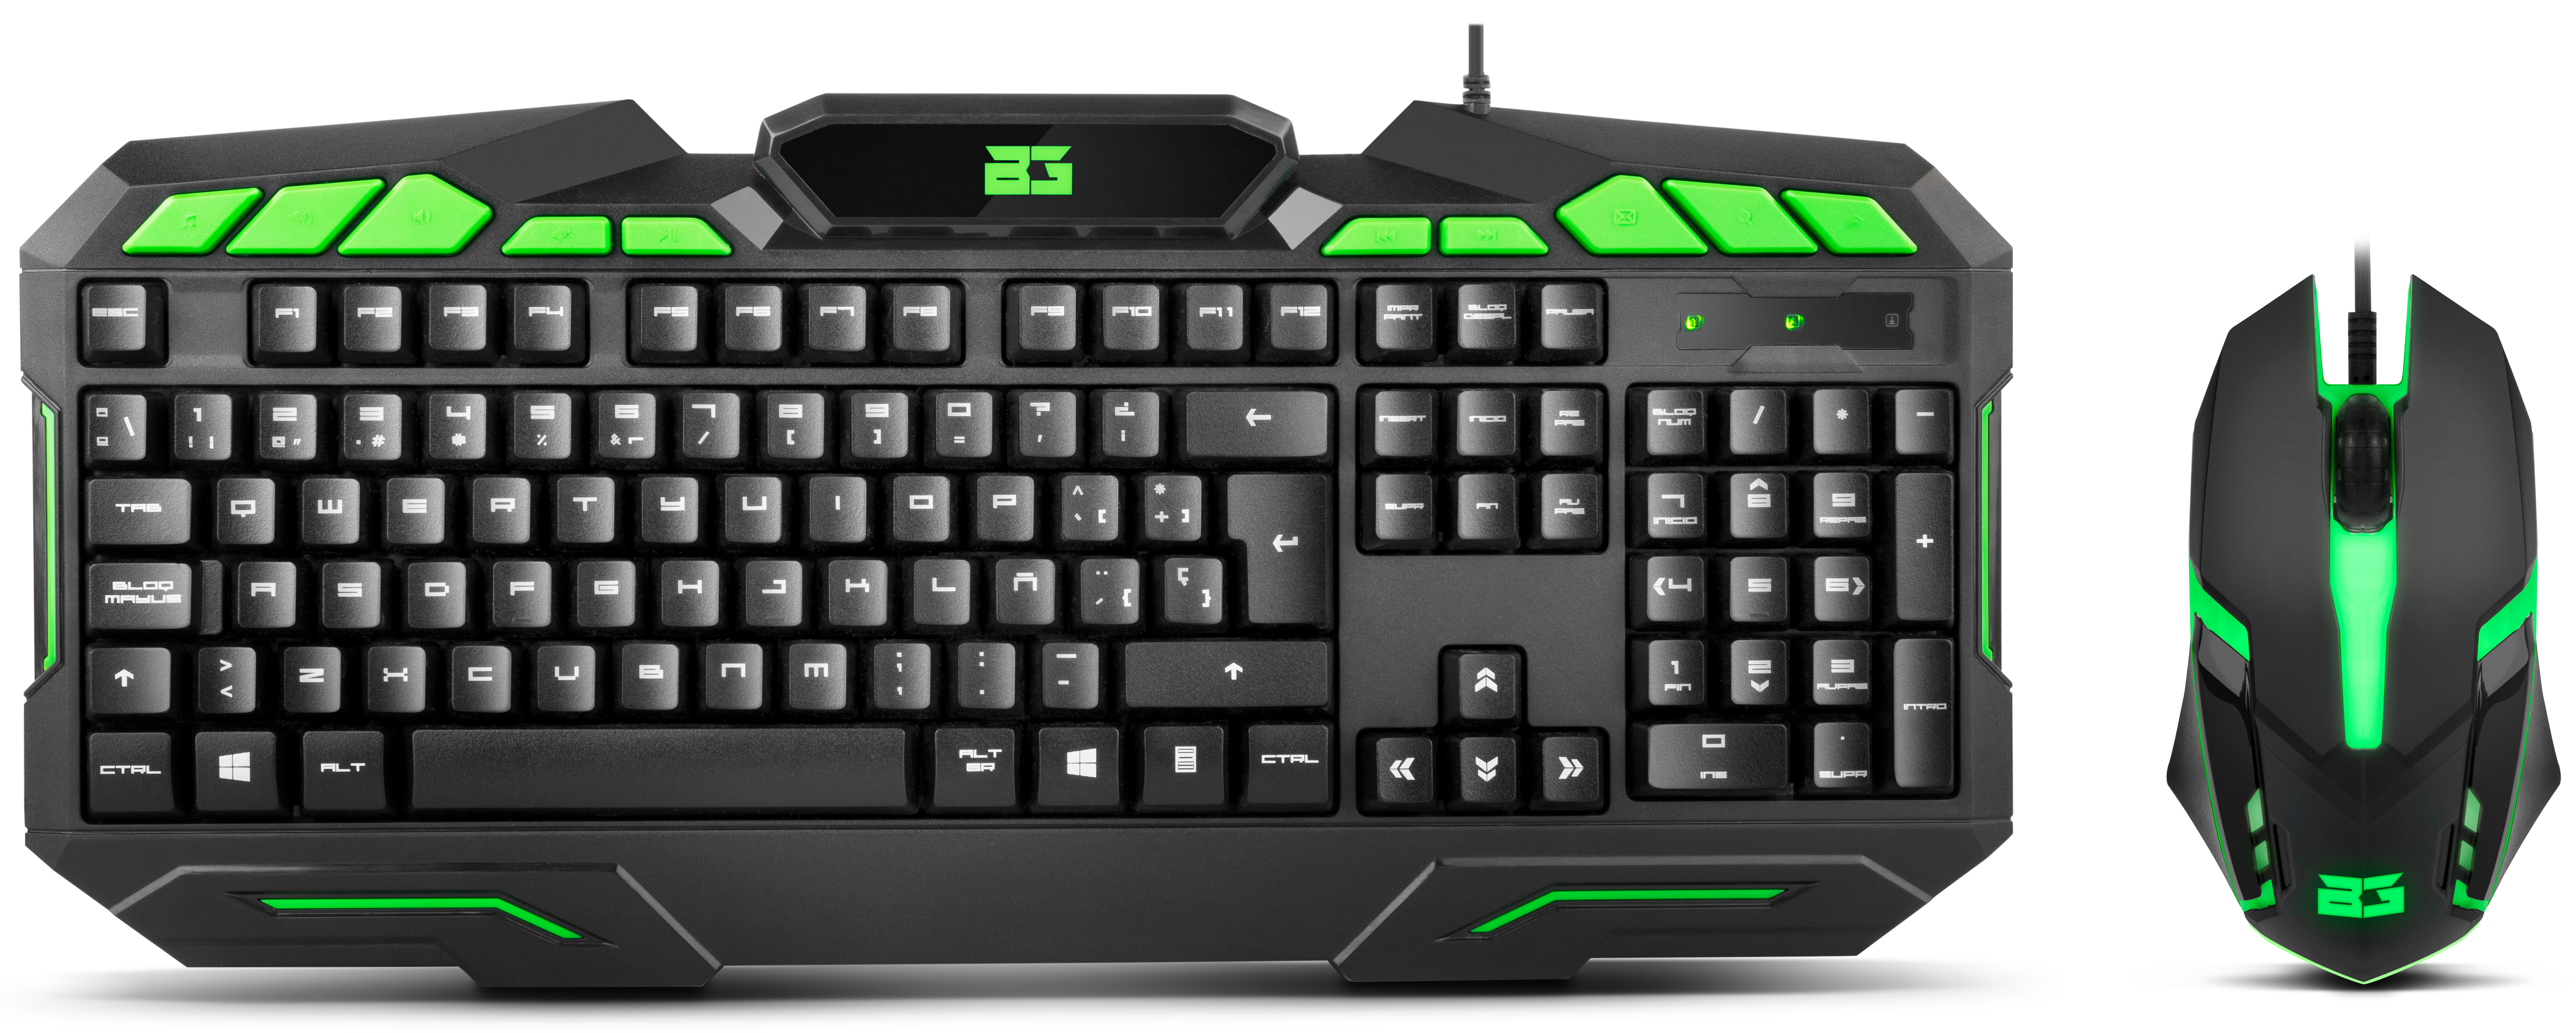 Defender Doom Keeper GK-100dl. Клавиатура Doom Keeper. Defender клавиатура и мышь Rush. Клавиатура со встроенным аккумулятором.